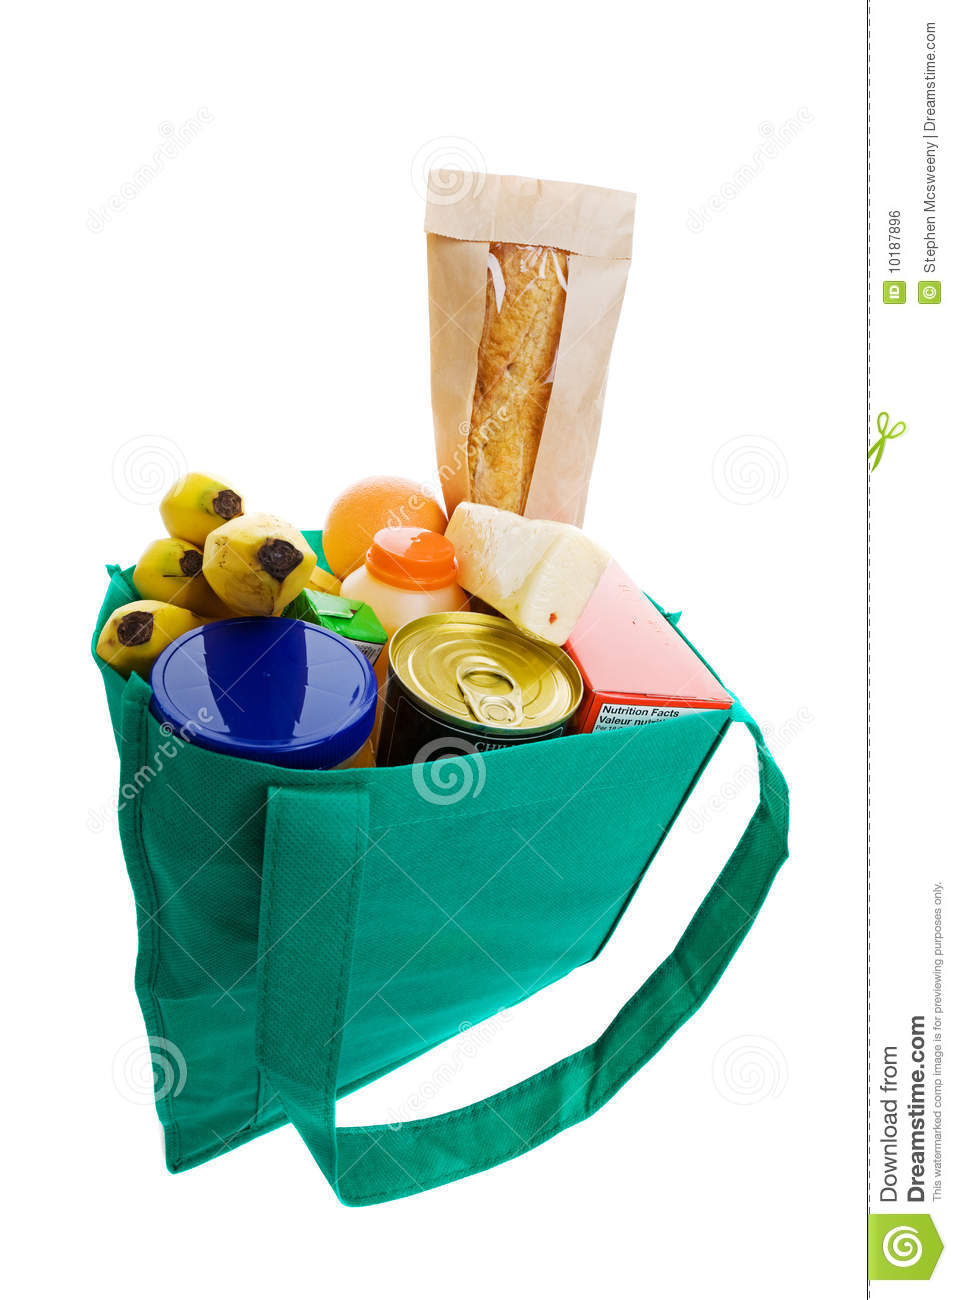 Grocery Bag Royalty Free Stock Image   Image  10187896